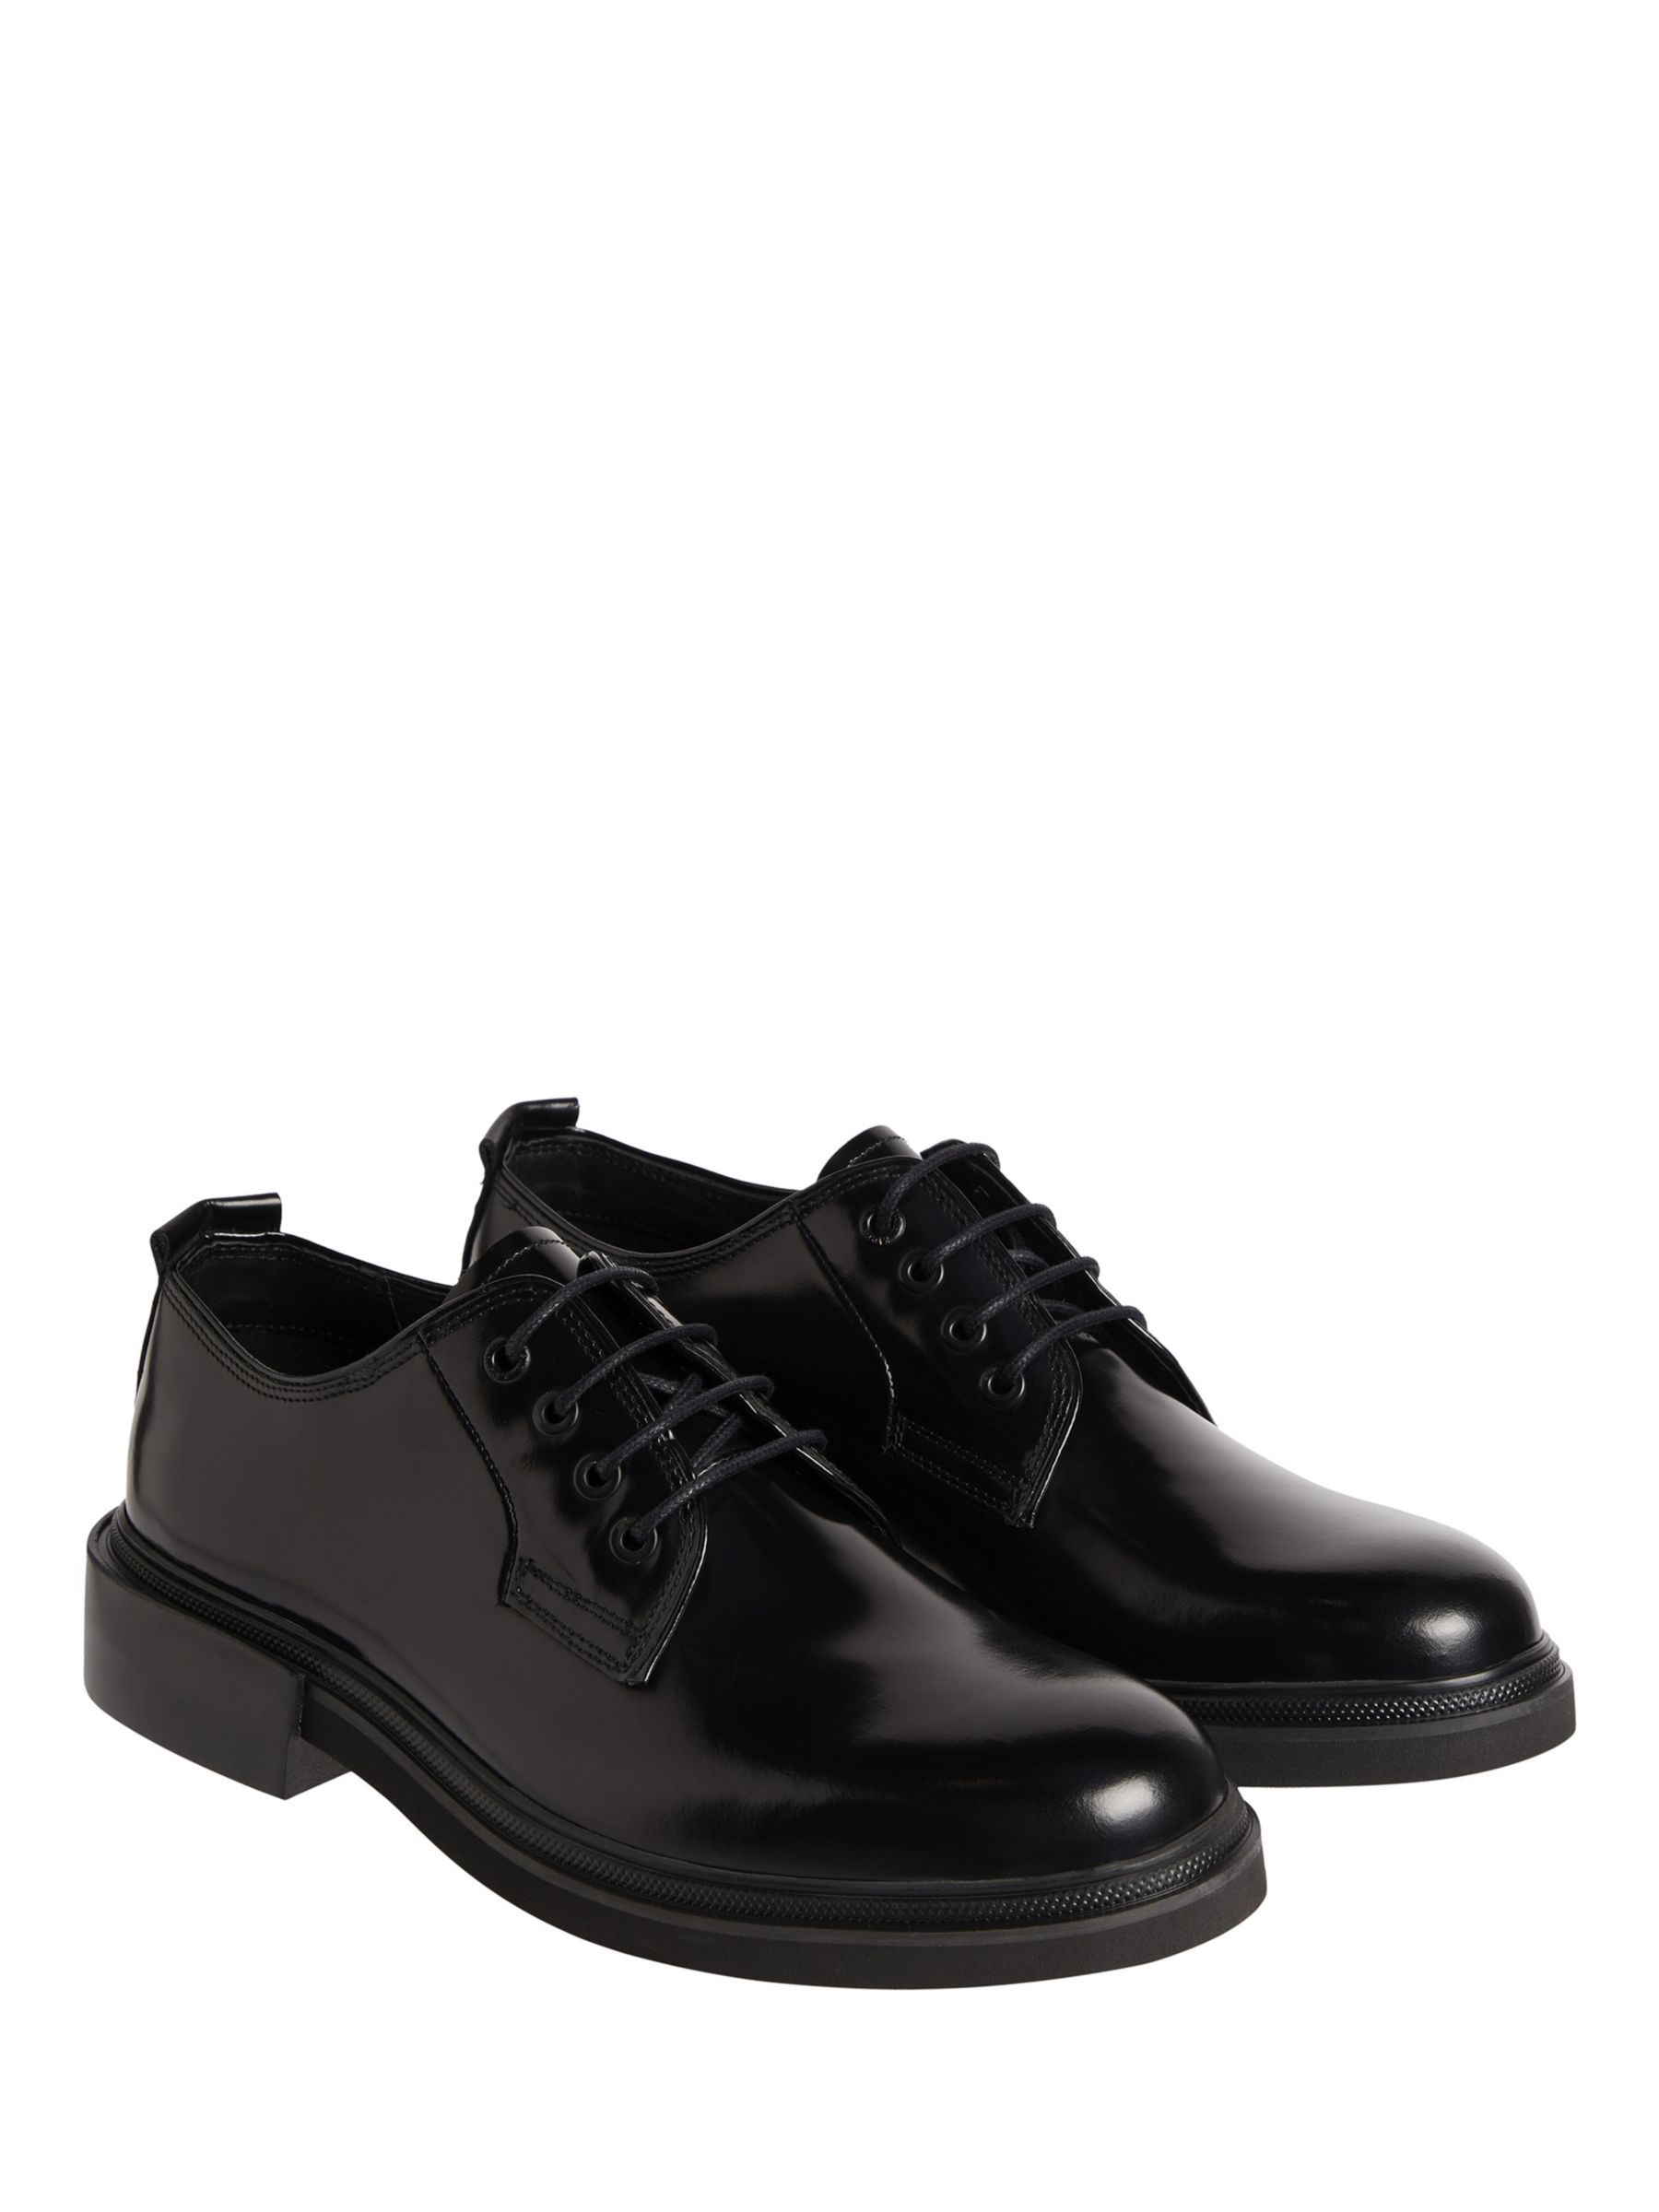 Calvin Klein Postman Derby Formal Shoes, Black at John Lewis & Partners